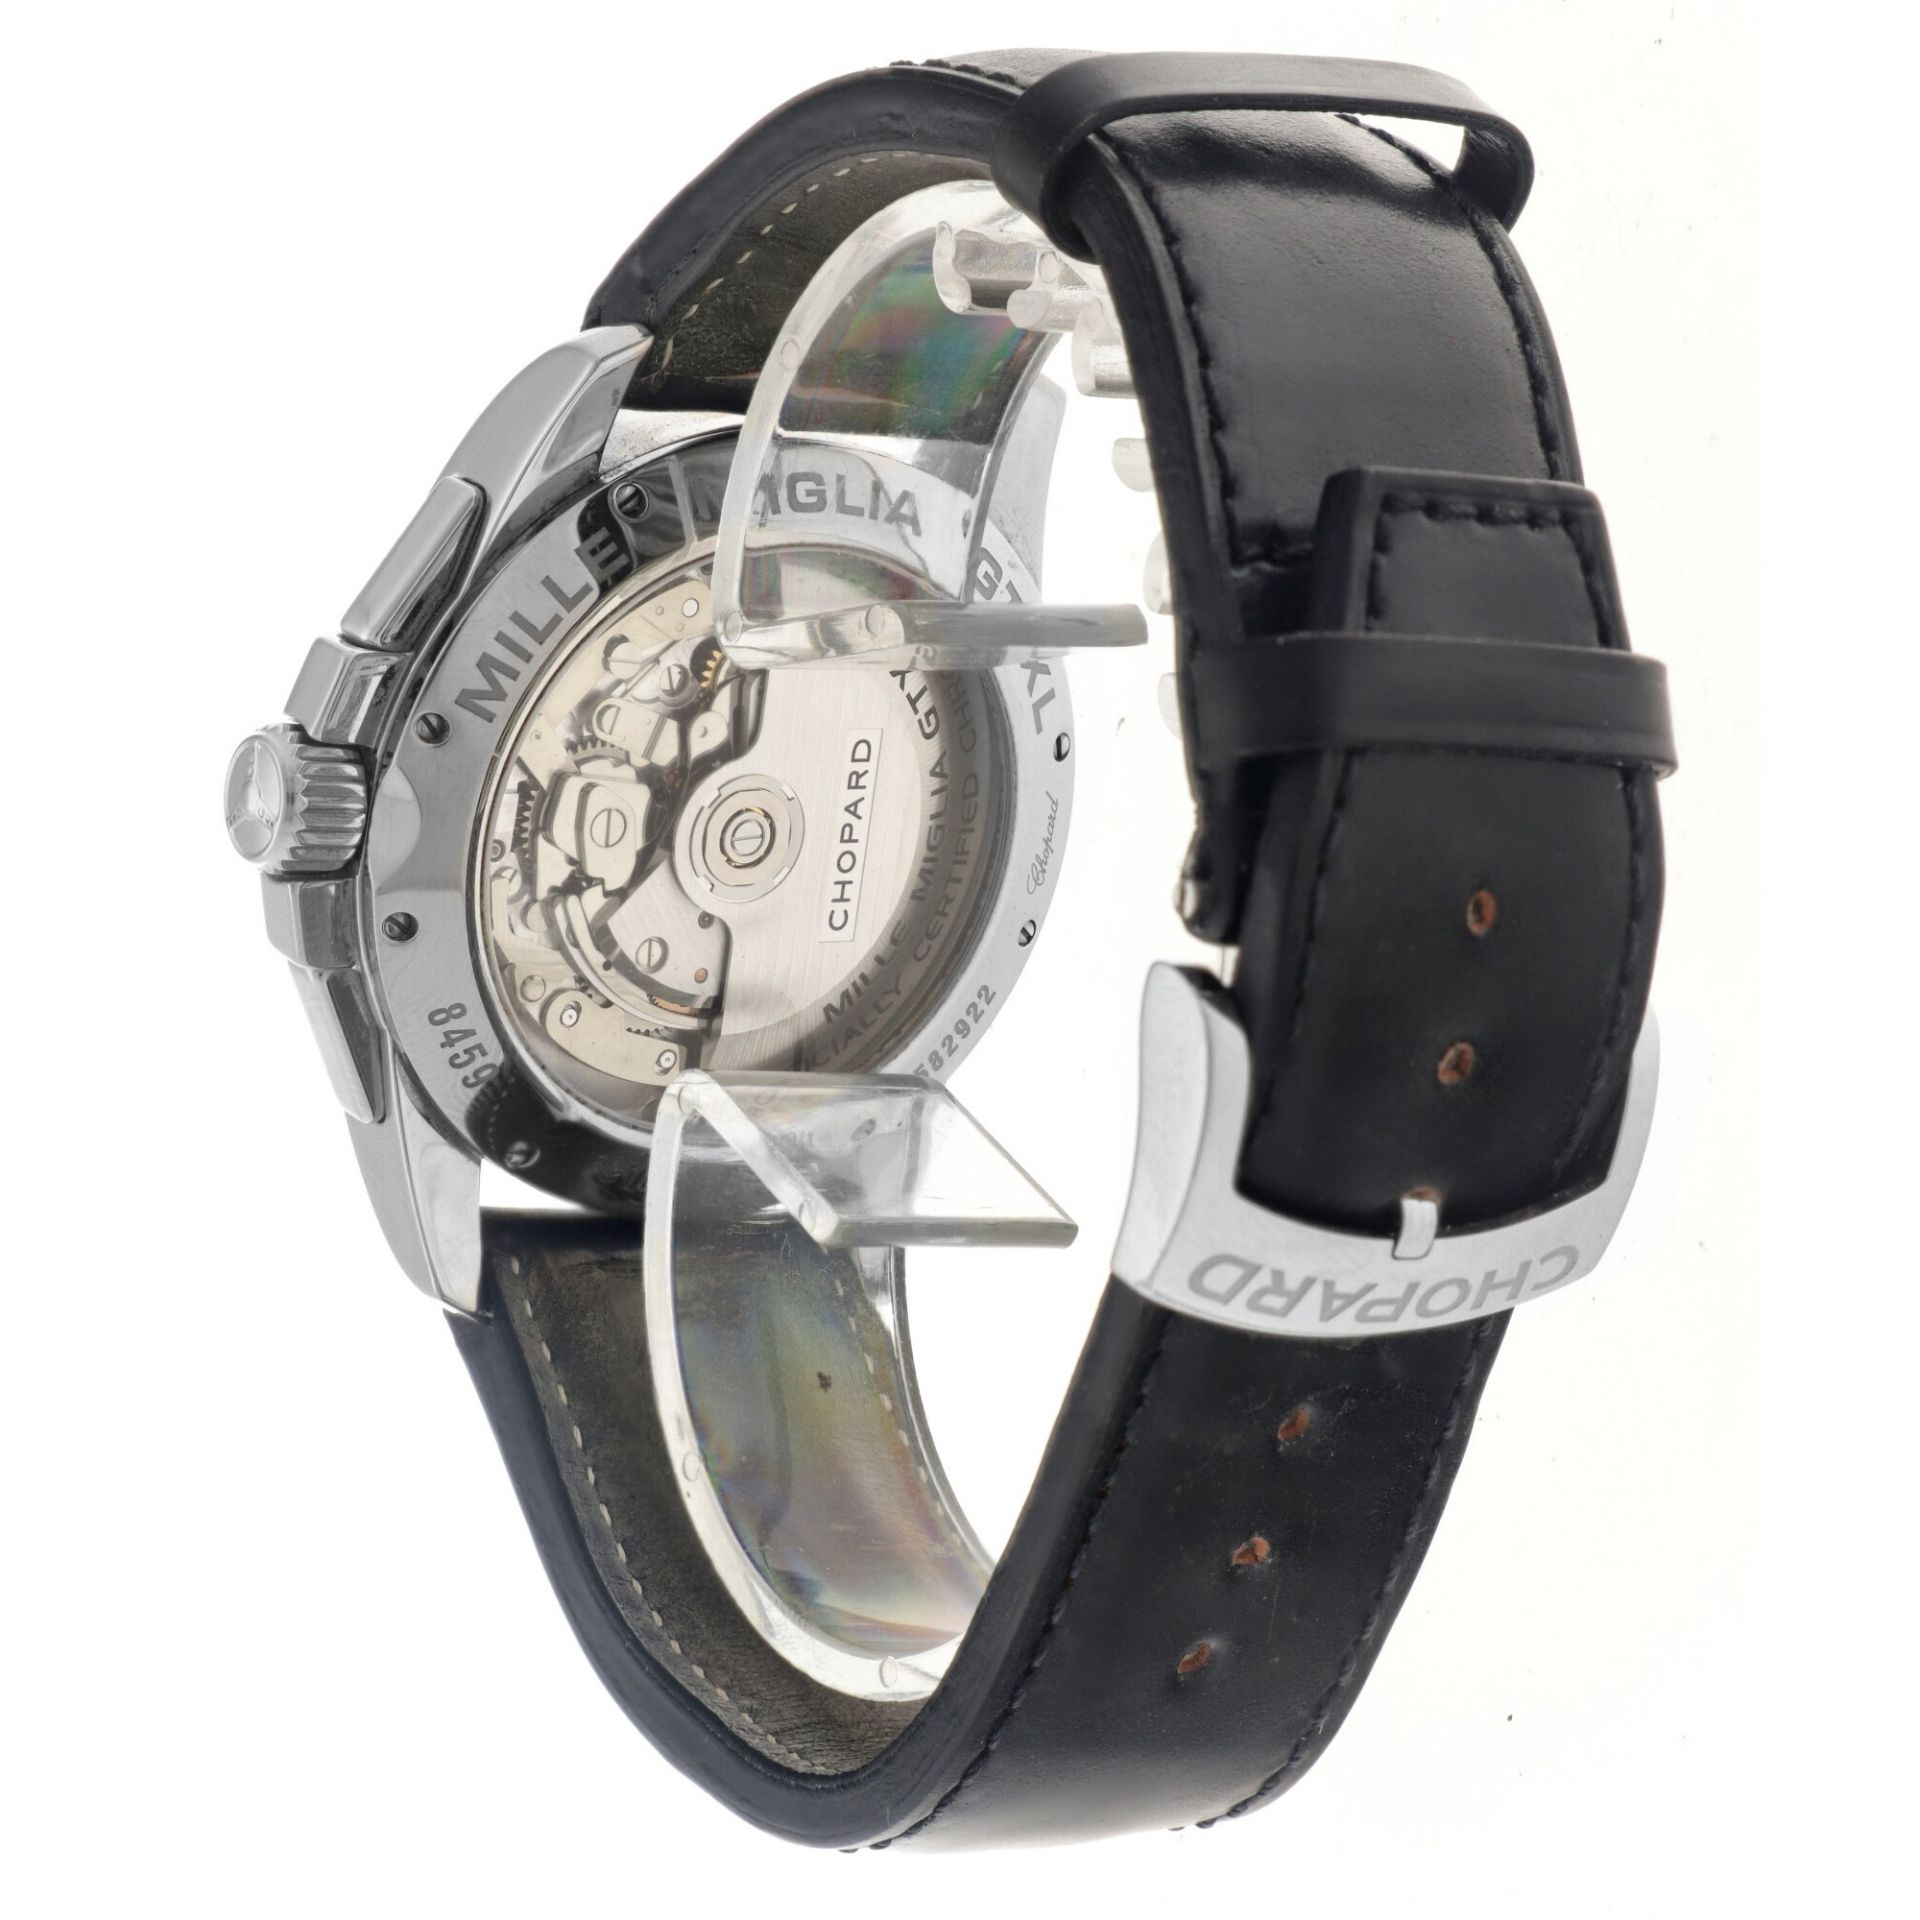 Chopard Mille Miglia Gran Turismo XL 8459 - Men's watch - 2014. - Image 3 of 6